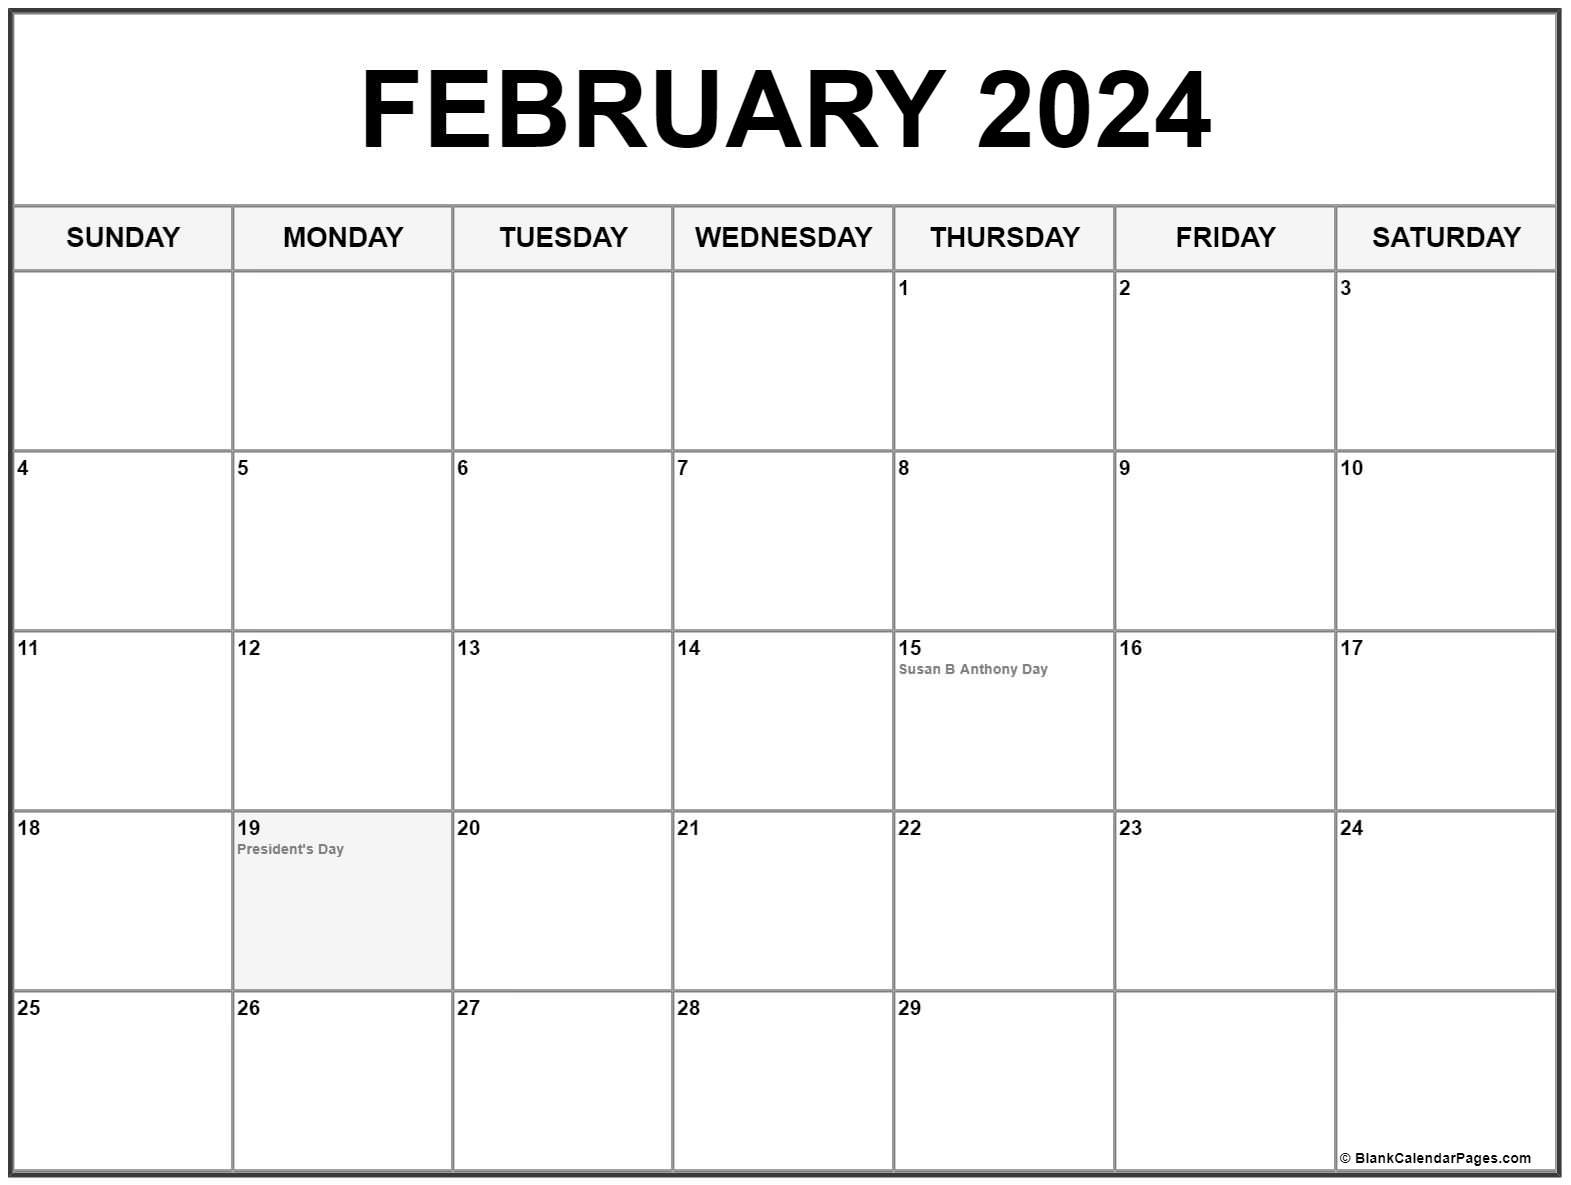 feb-2023-calendar-with-holidays-get-calender-2023-update